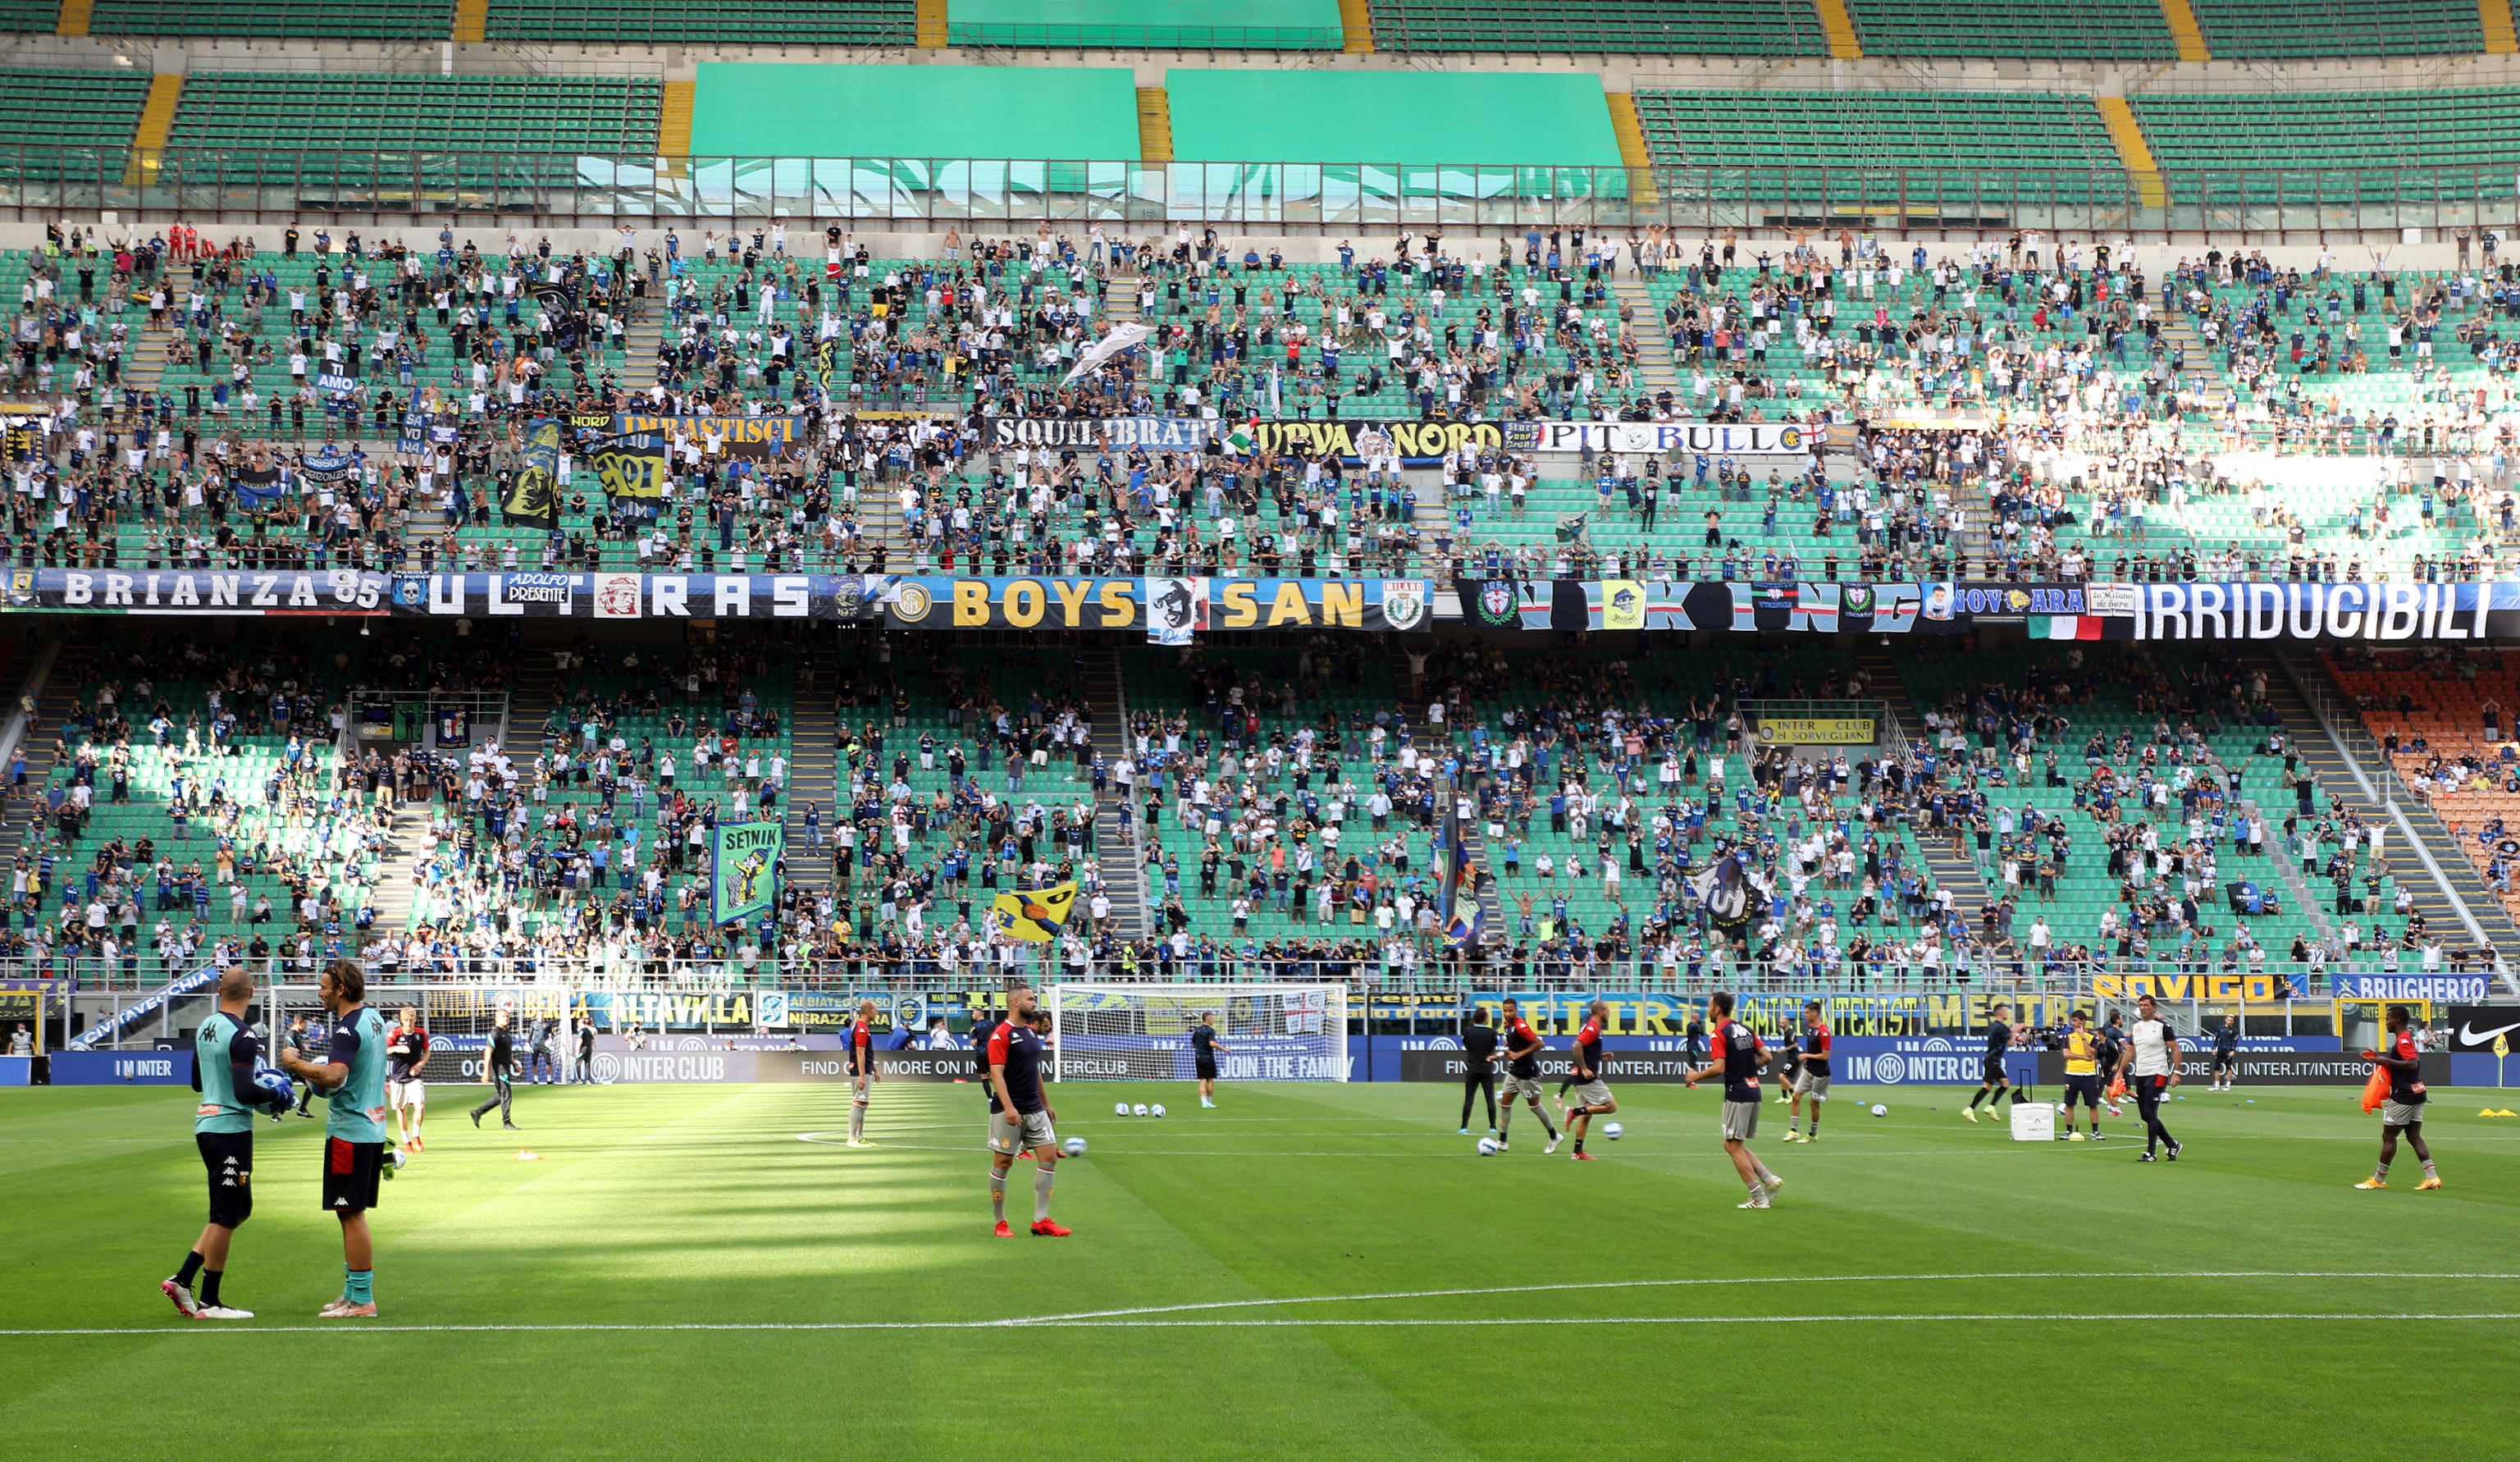 Serie A: stadi riaperti, da San Siro a Torino tifosi col green pass